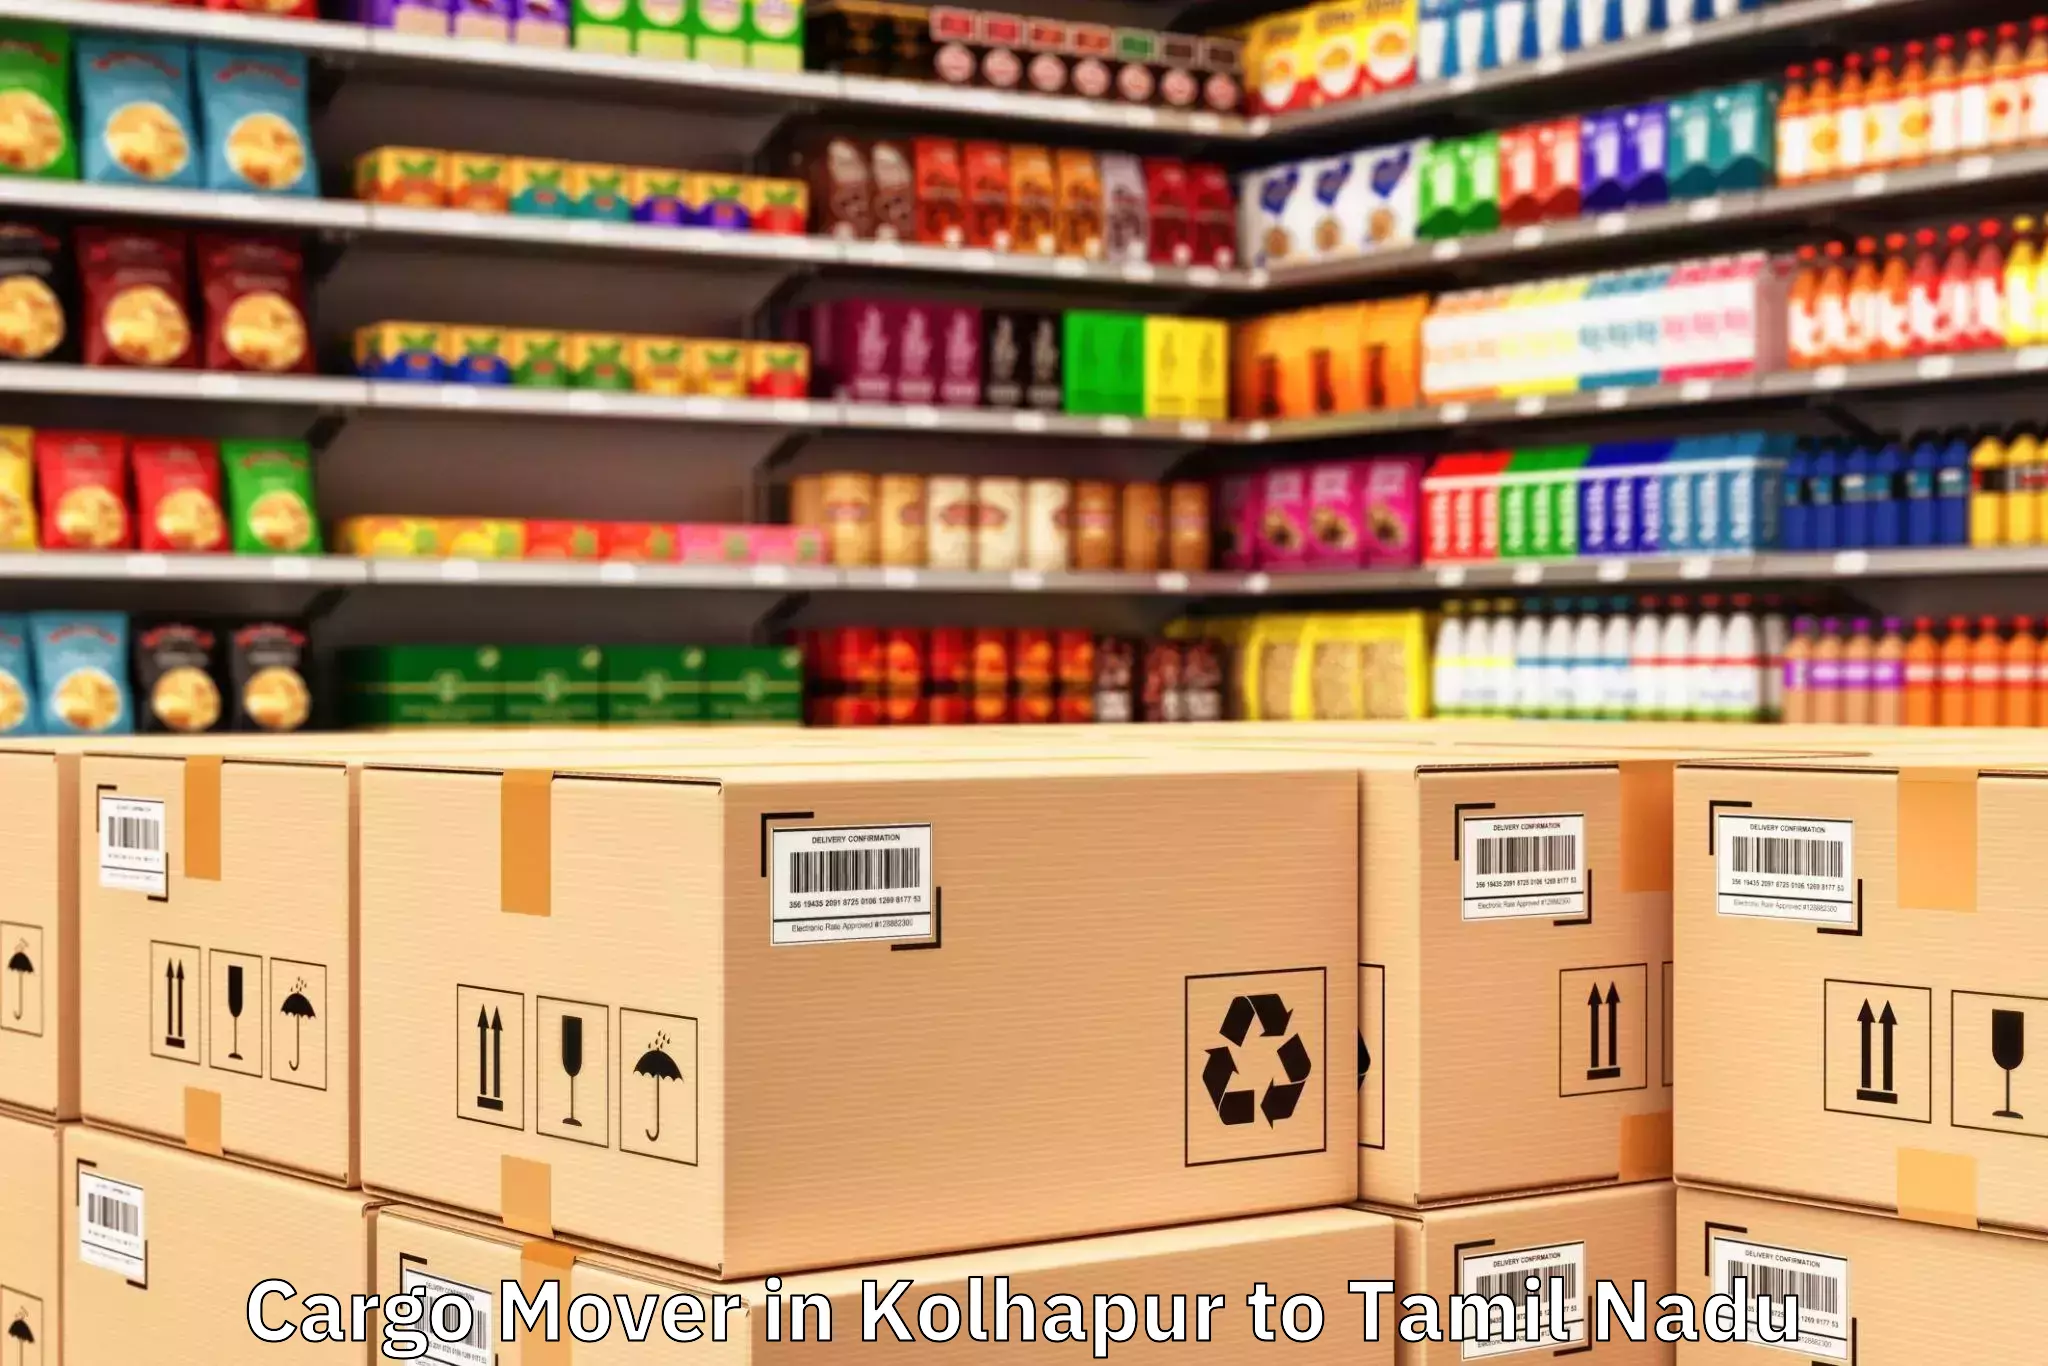 Kolhapur to Sholinghur Cargo Mover Booking